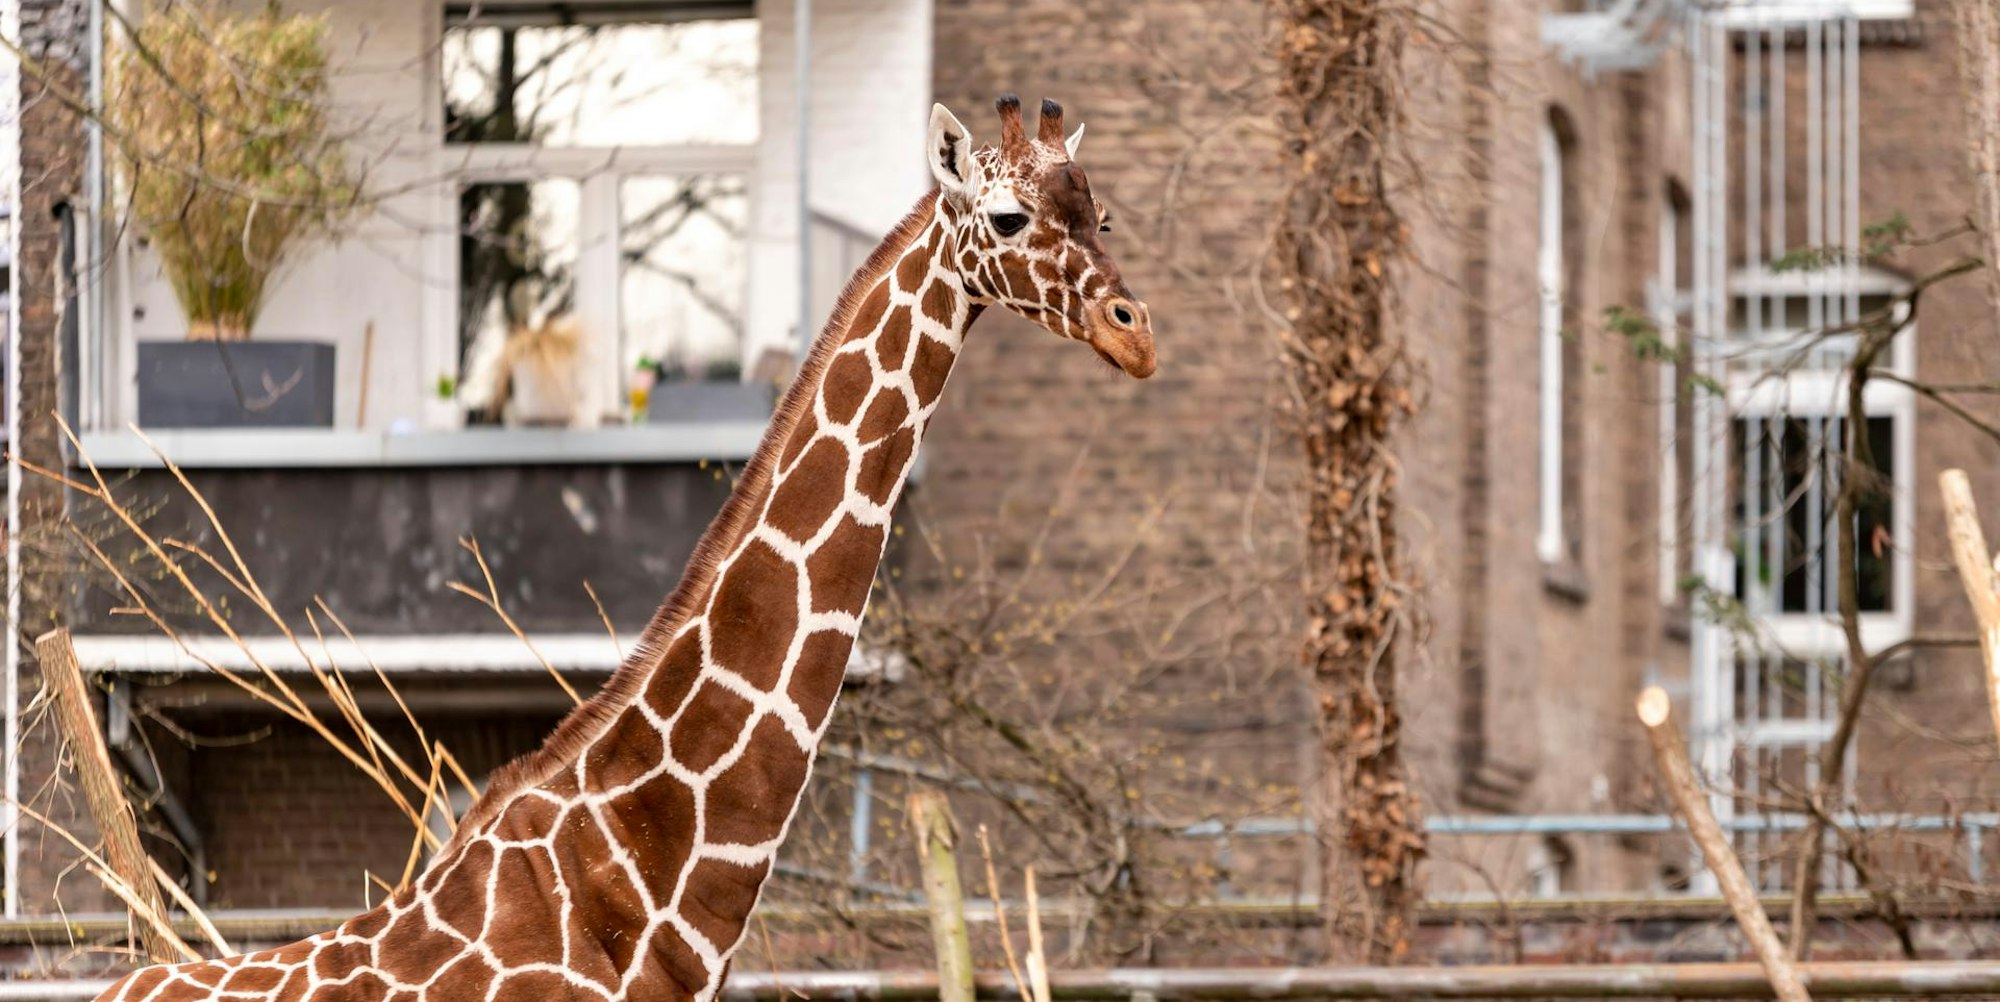 Zoo Giraffe Roll